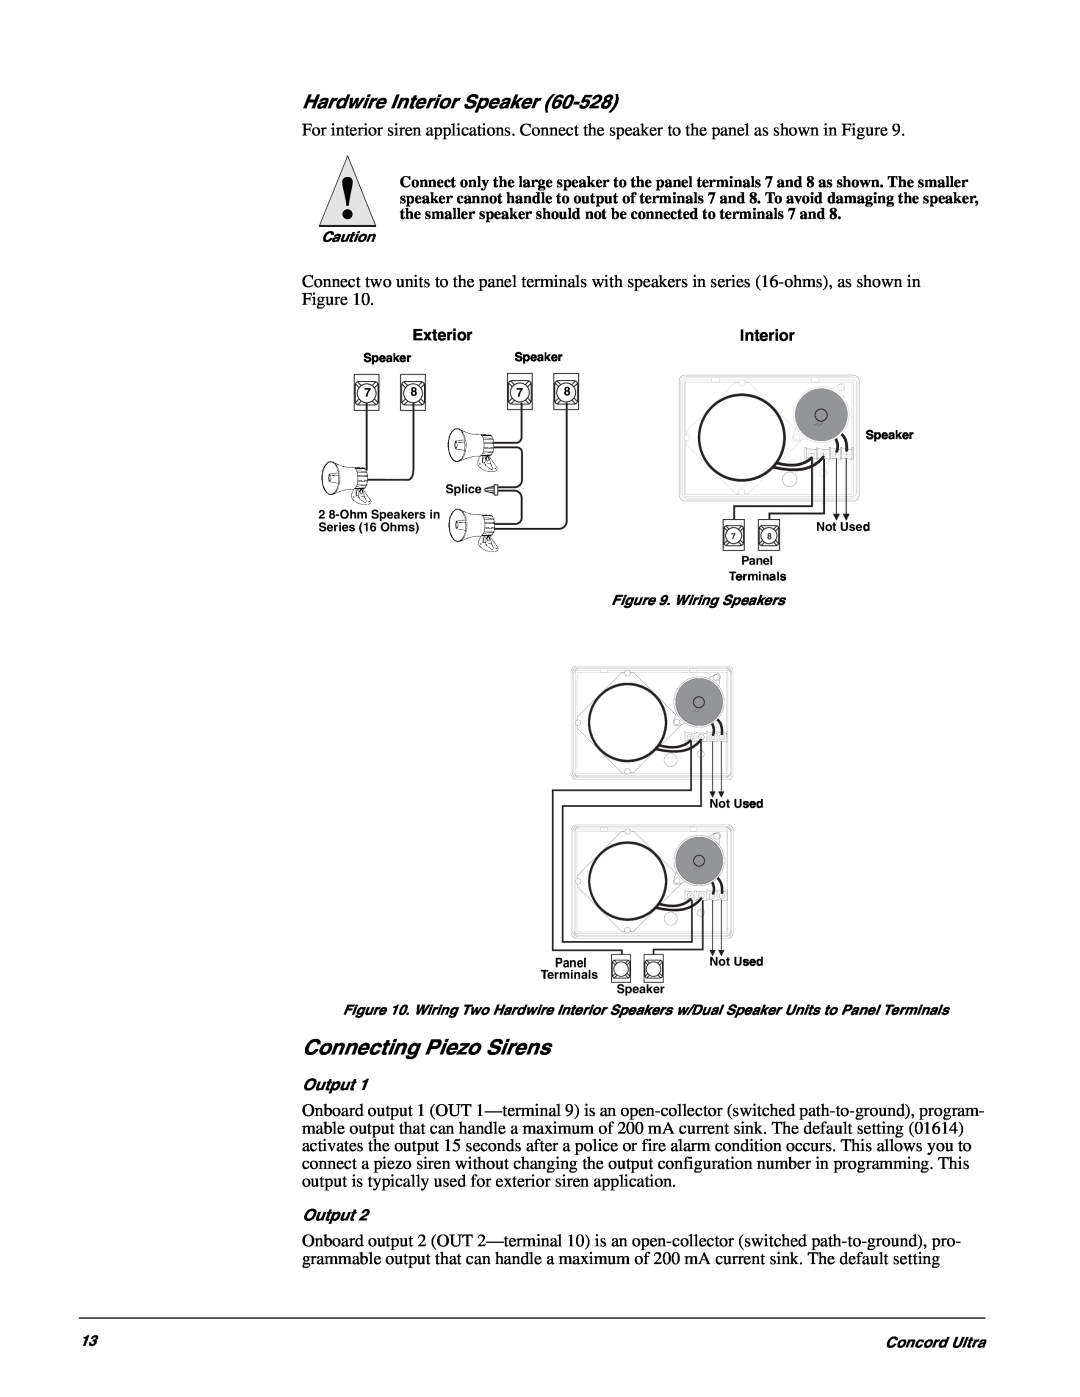 GE 60-960-95 installation instructions Connecting Piezo Sirens, Hardwire Interior Speaker 